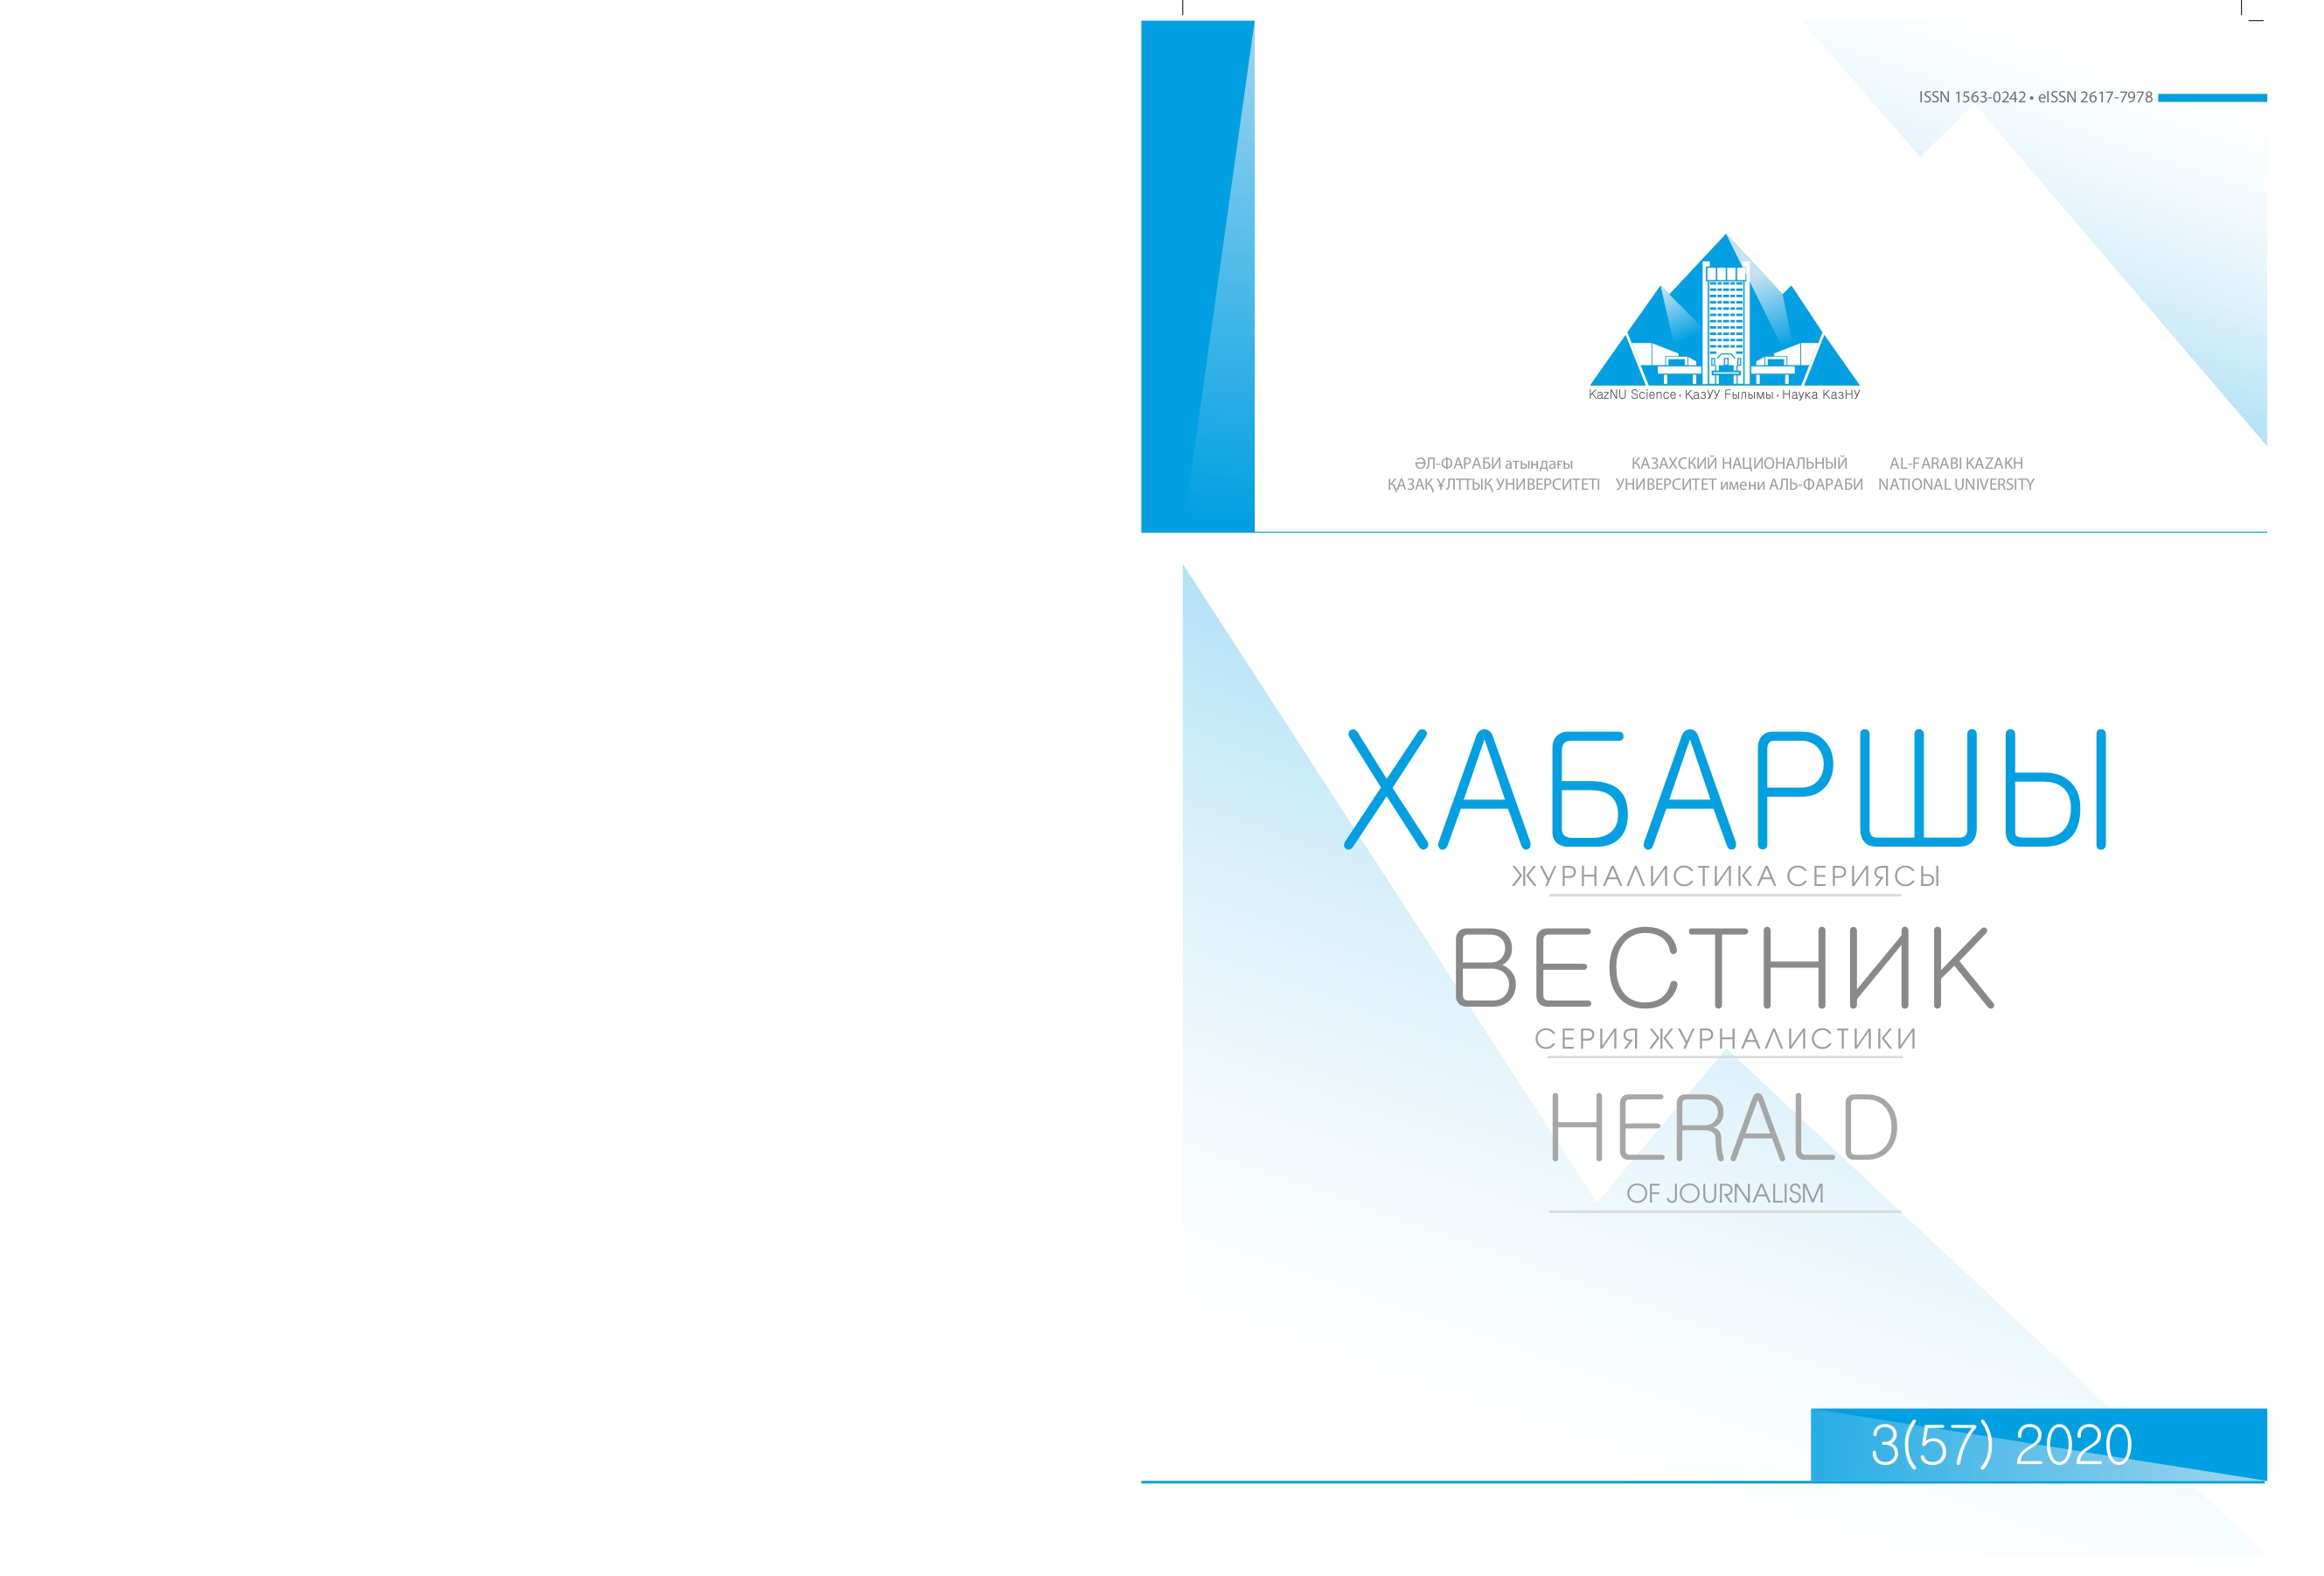 					View Vol. 57 No. 3 (2020): Al-Farabi kazakh national university. Herald of journalism
				